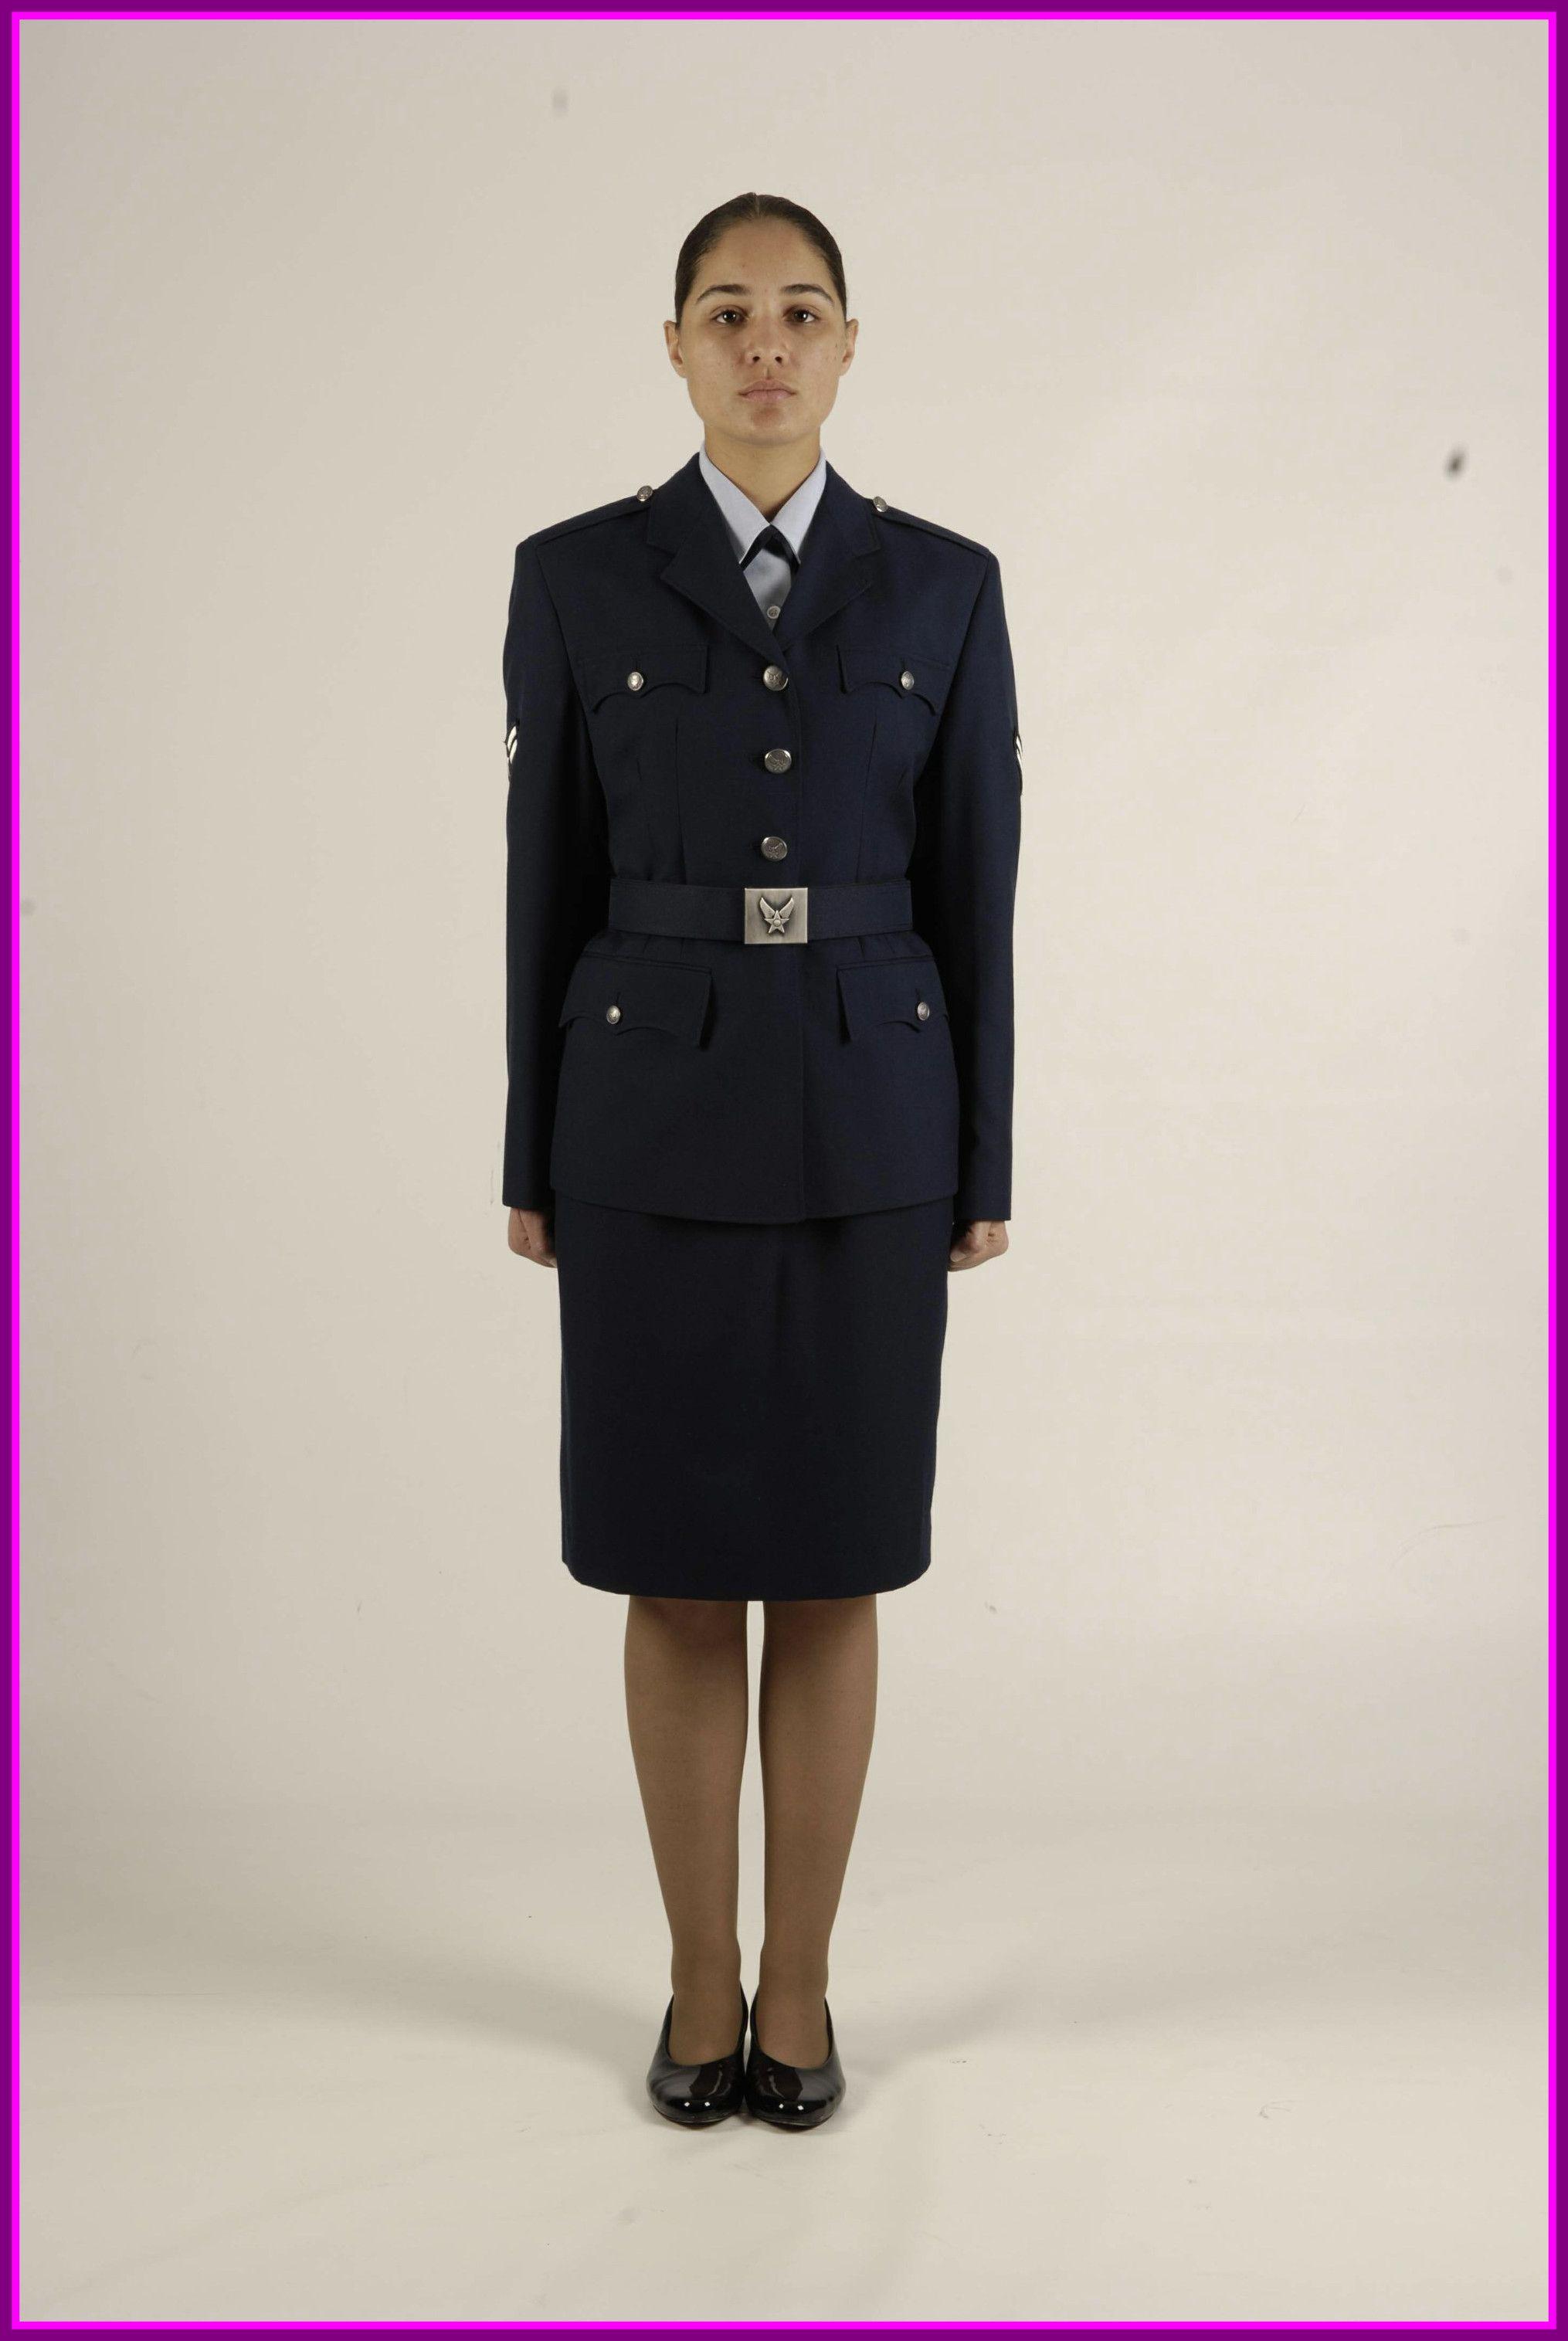 The Best Brilliant Wo Dress Blues Air Force U Playzoa Pic Of Concept